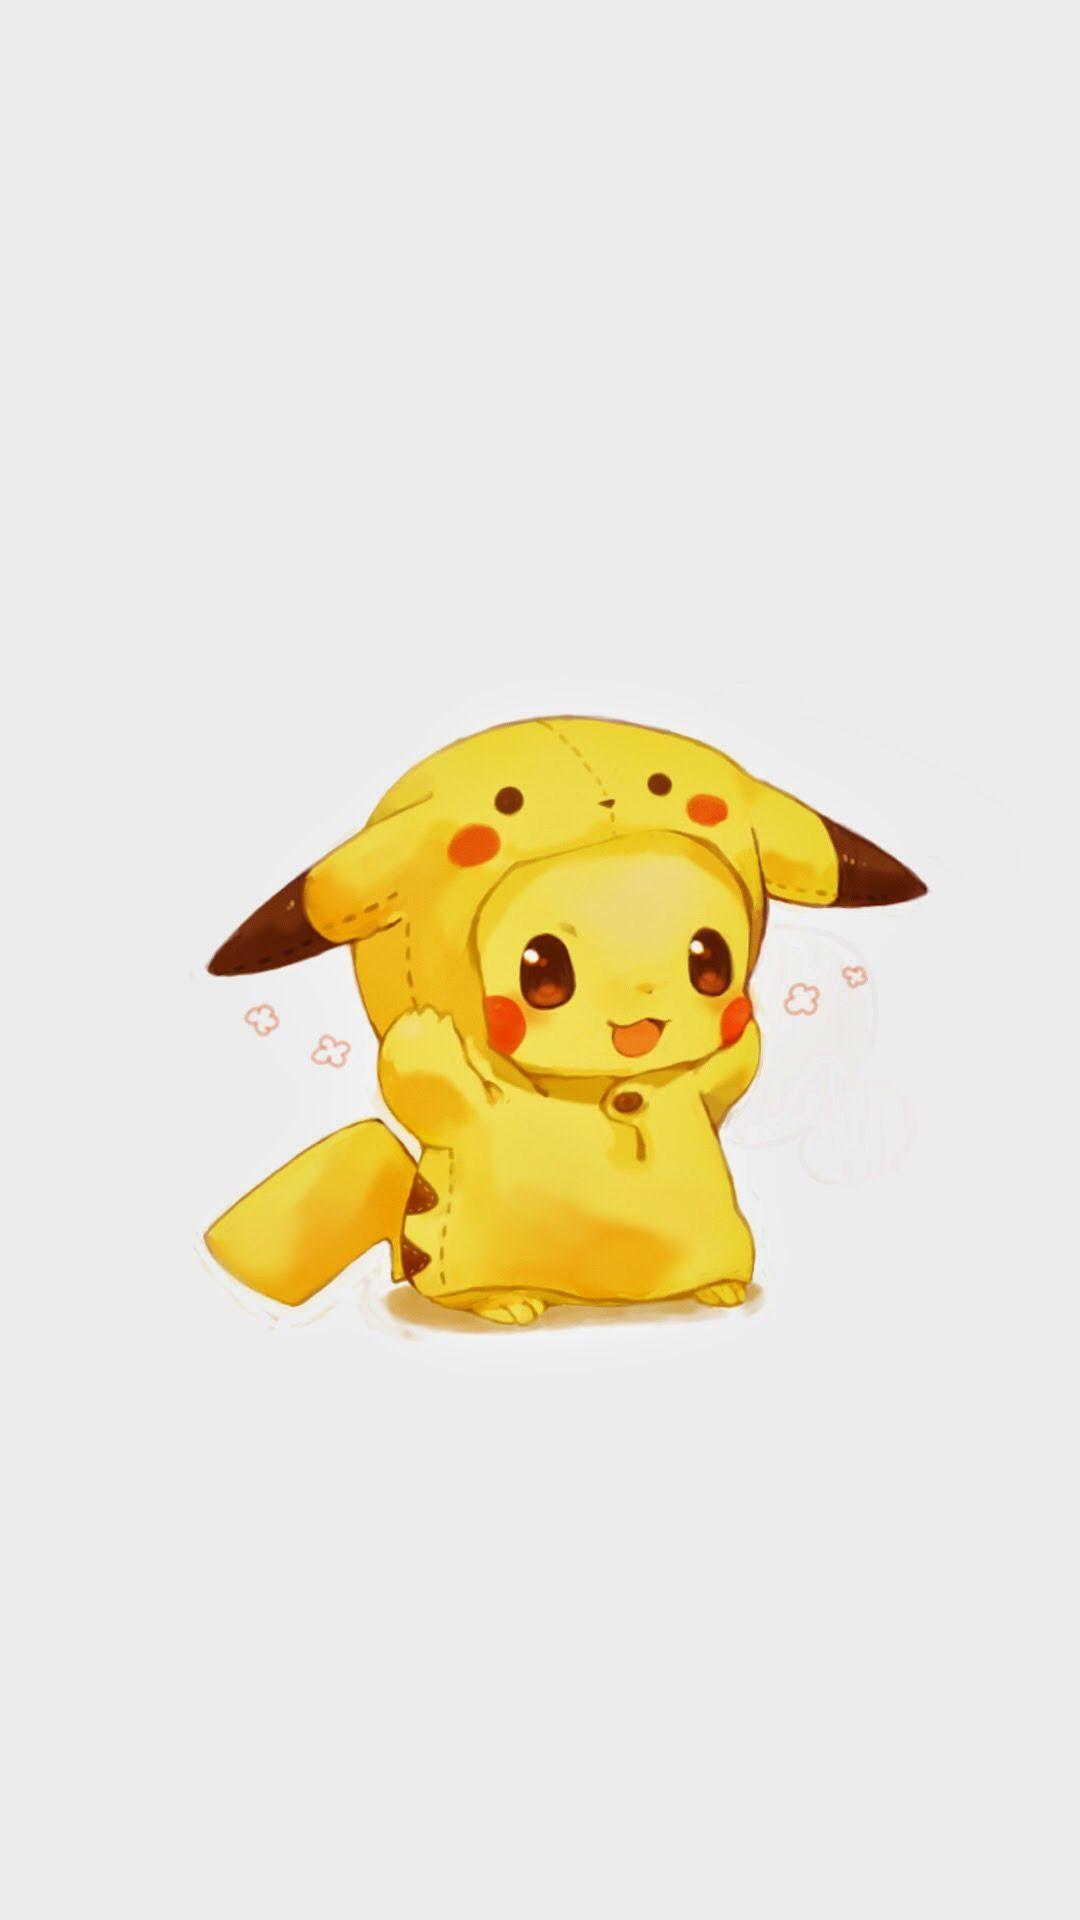 Tap image for more funny cute Pikachu wallpaper! Pikachu